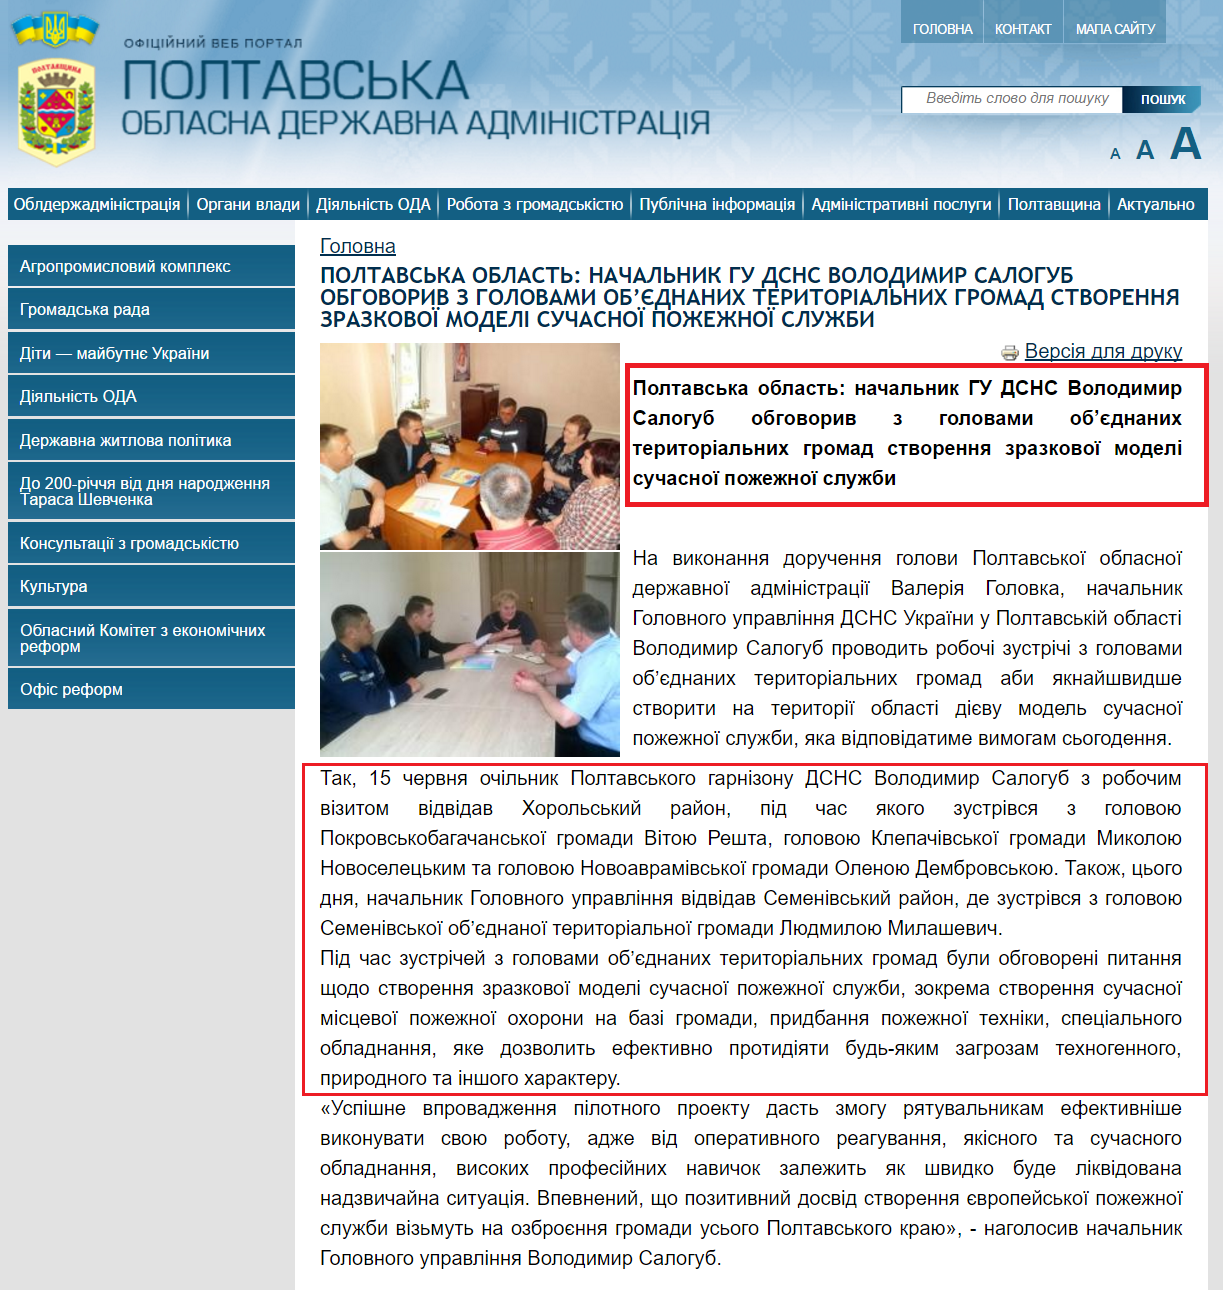 http://www.adm-pl.gov.ua/news/poltavska-oblast-nachalnik-gu-dsns-volodimir-salogub-obgovoriv-z-golovami-obiednanih-teritorial